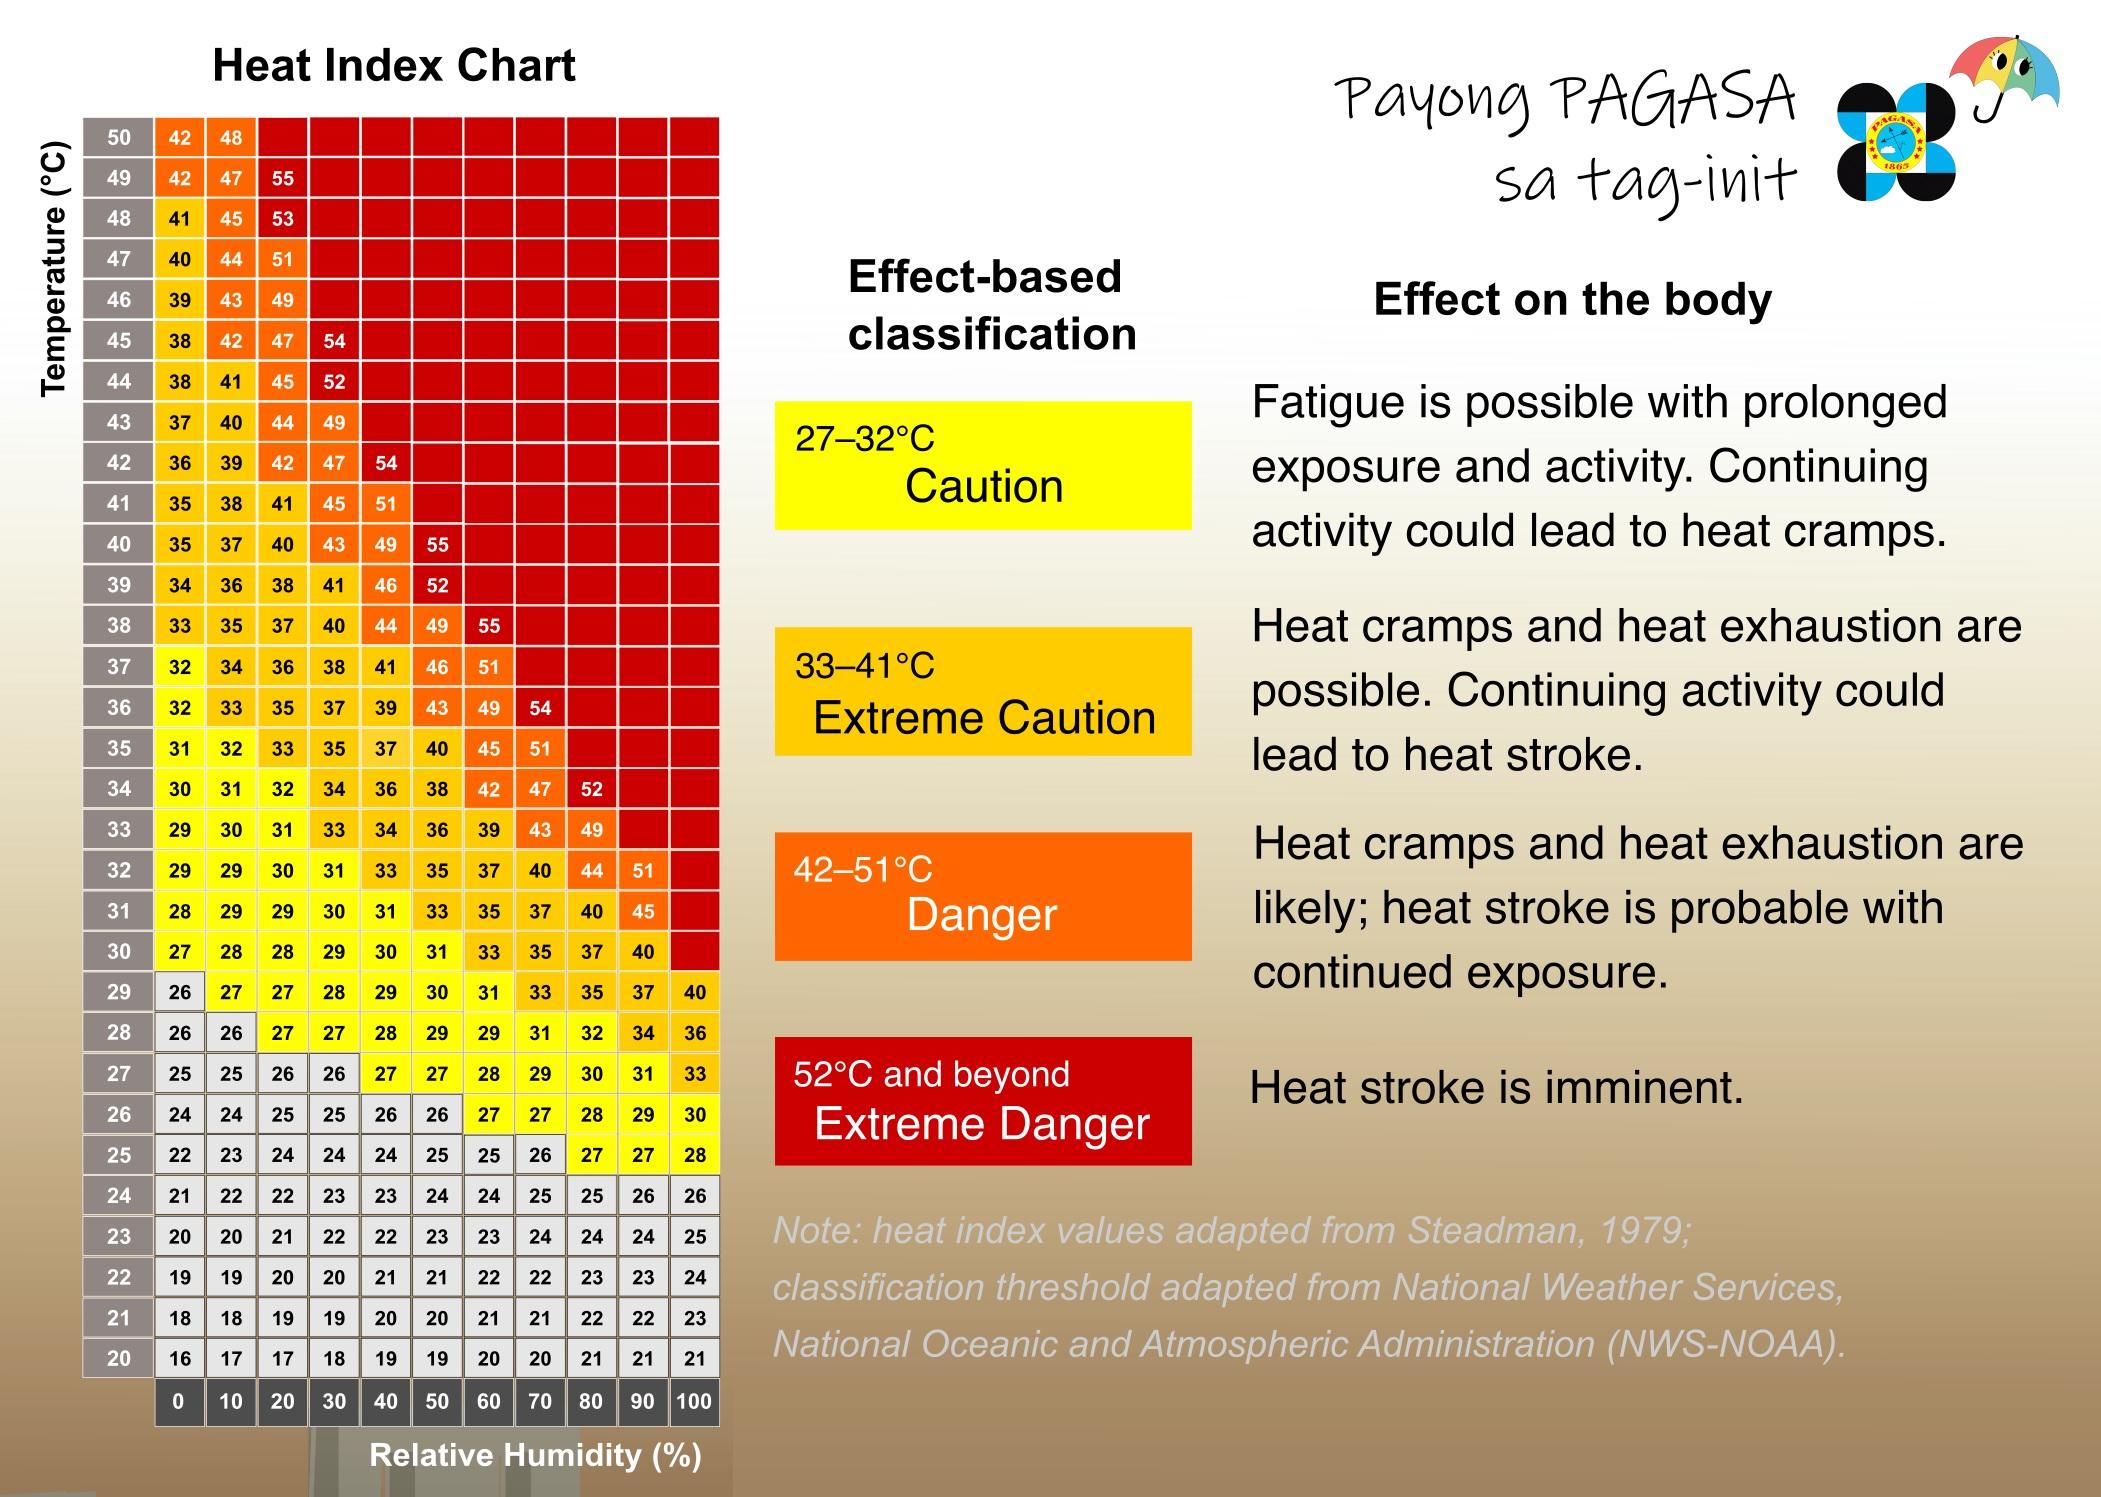 PAGASA's heat index chart